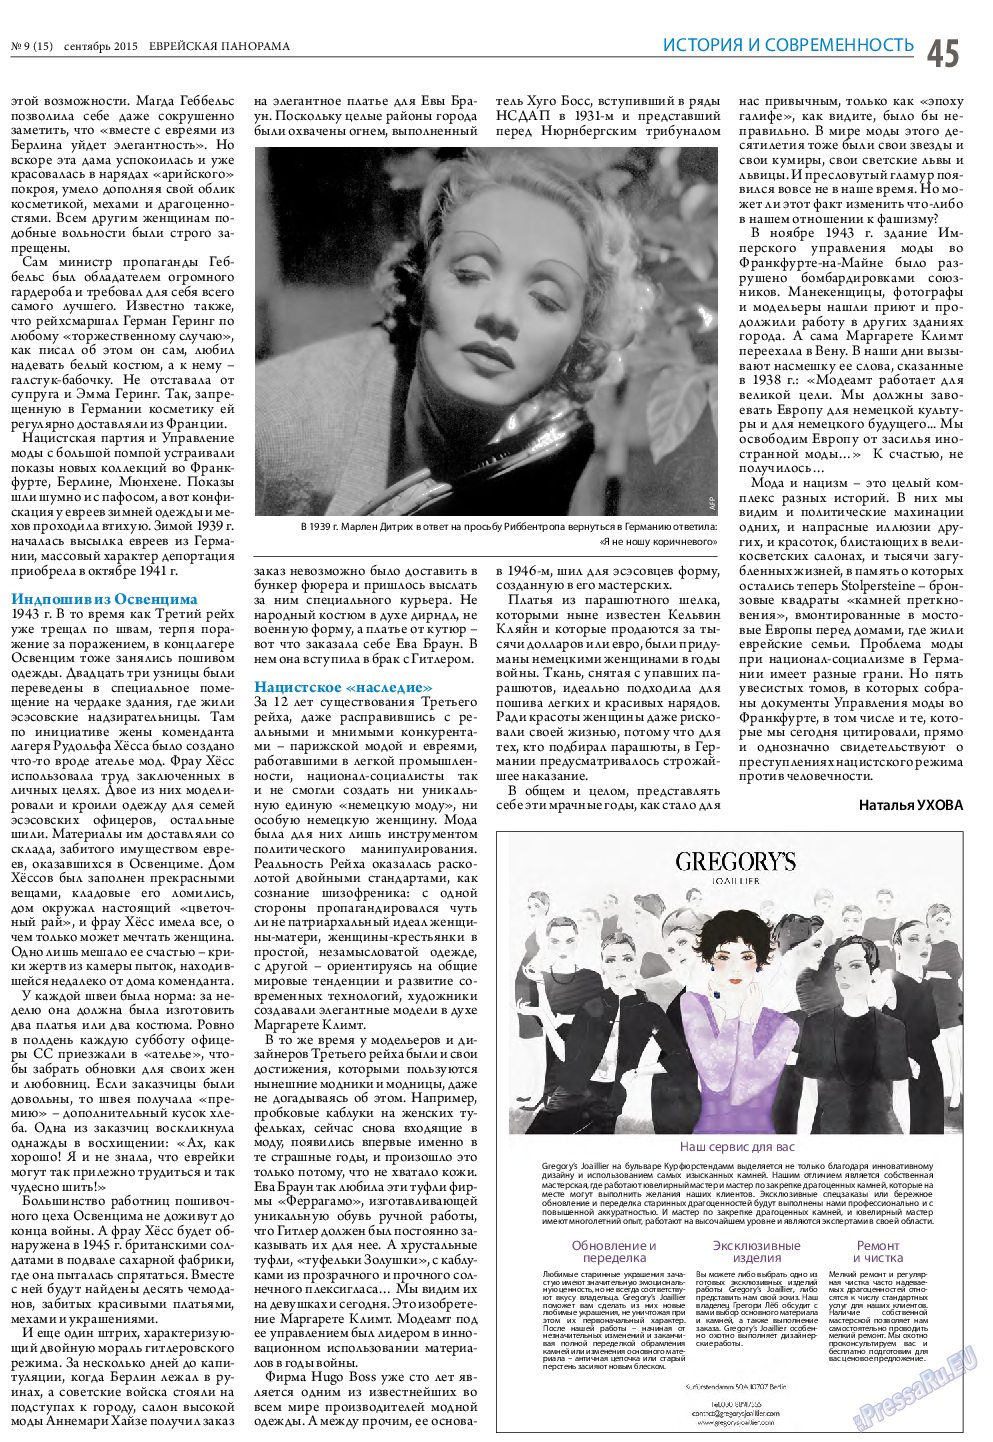 Еврейская панорама, газета. 2015 №9 стр.45